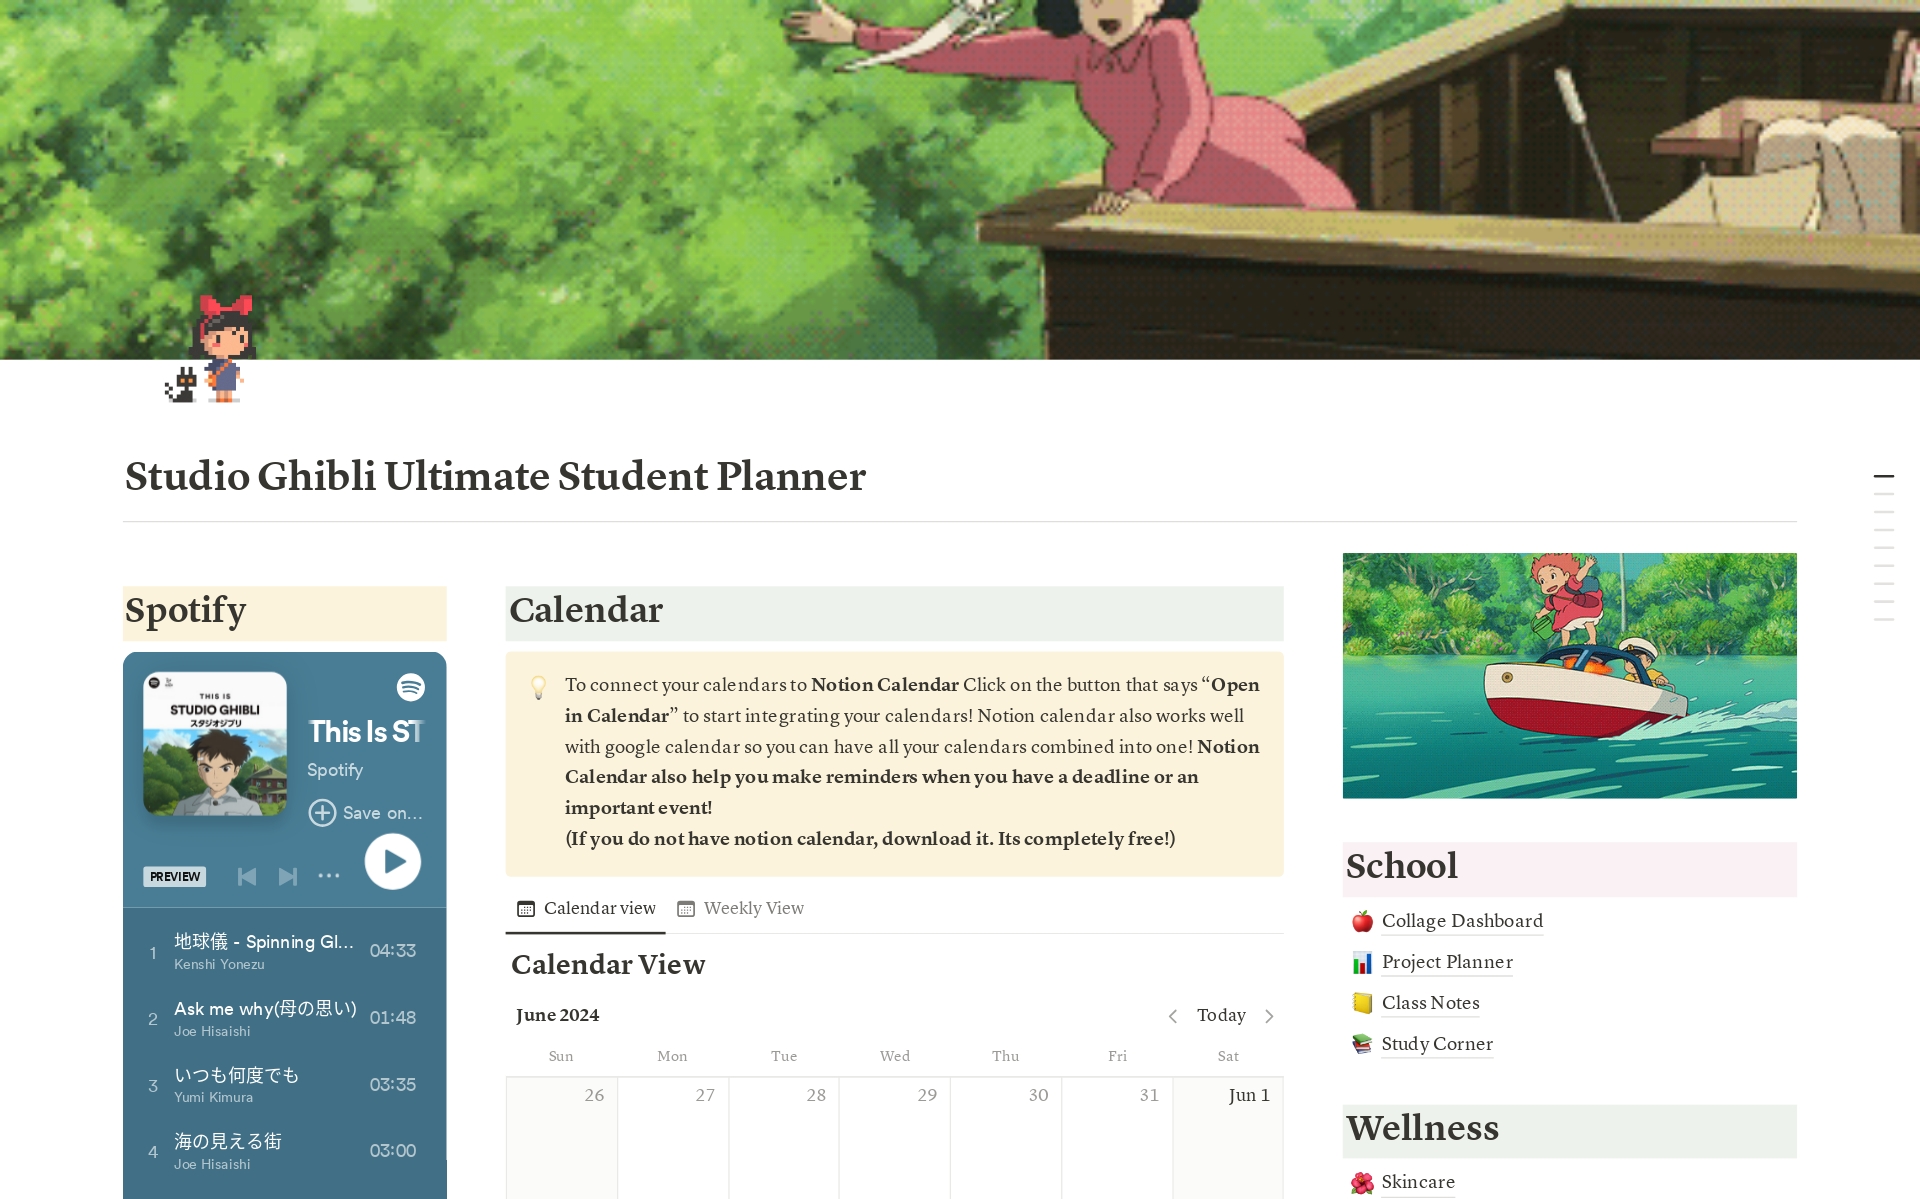 Aperçu du modèle de Studio Ghibli Ultimate Student Planner